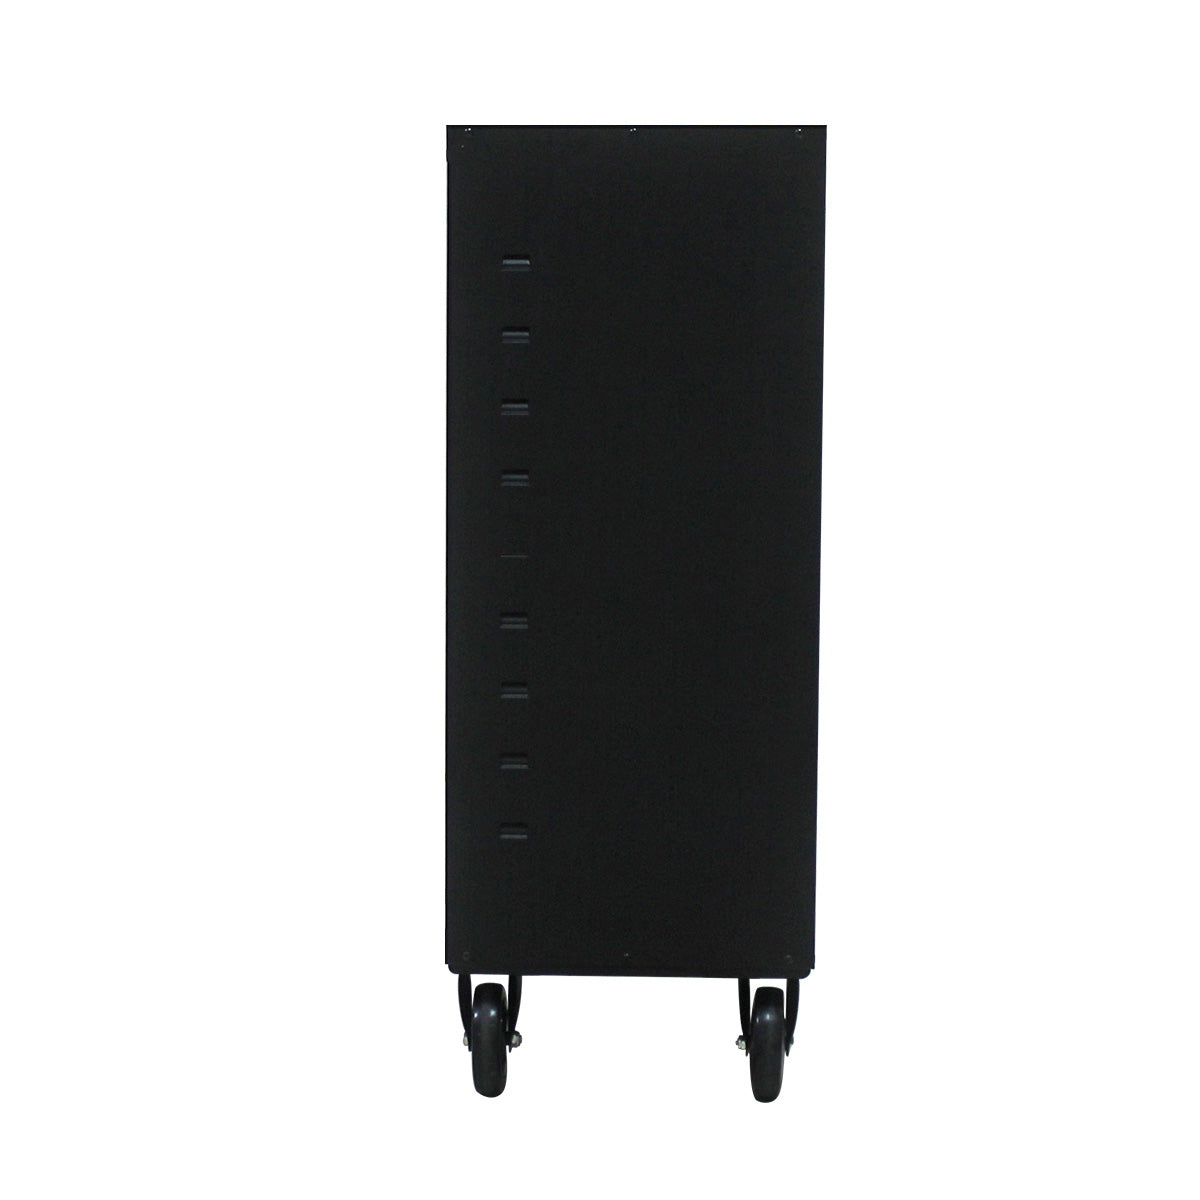 RADEWAY Metal Storage Cabinet with Locking Doors and Adjustable Shelves With Wheels